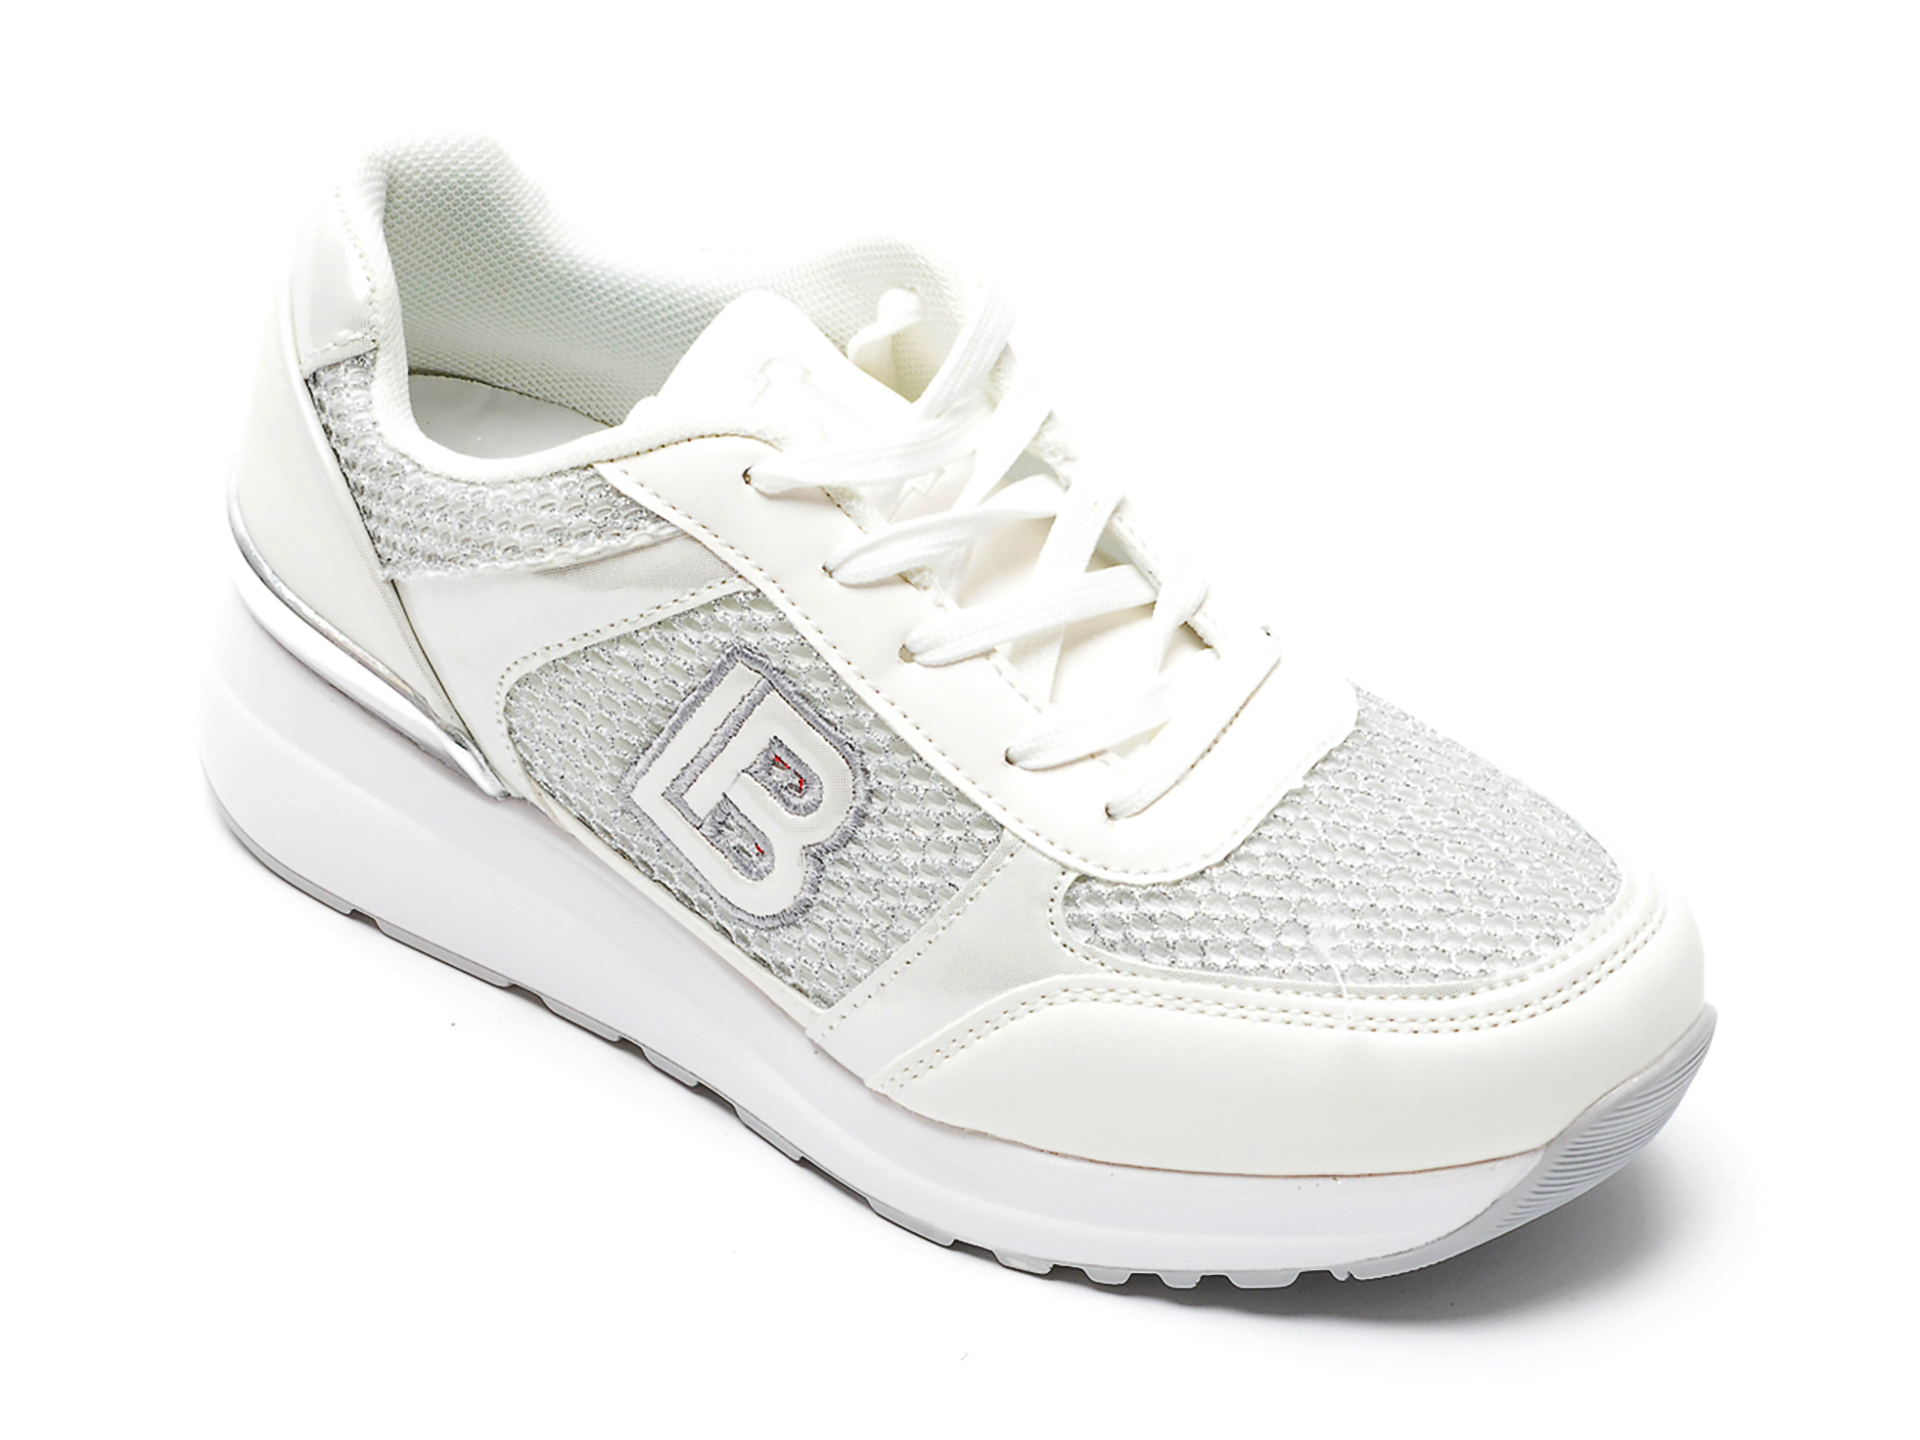 Pantofi sport LAURA BIAGIOTTI albi, 7511, din material textil si piele ecologica Laura Biagiotti